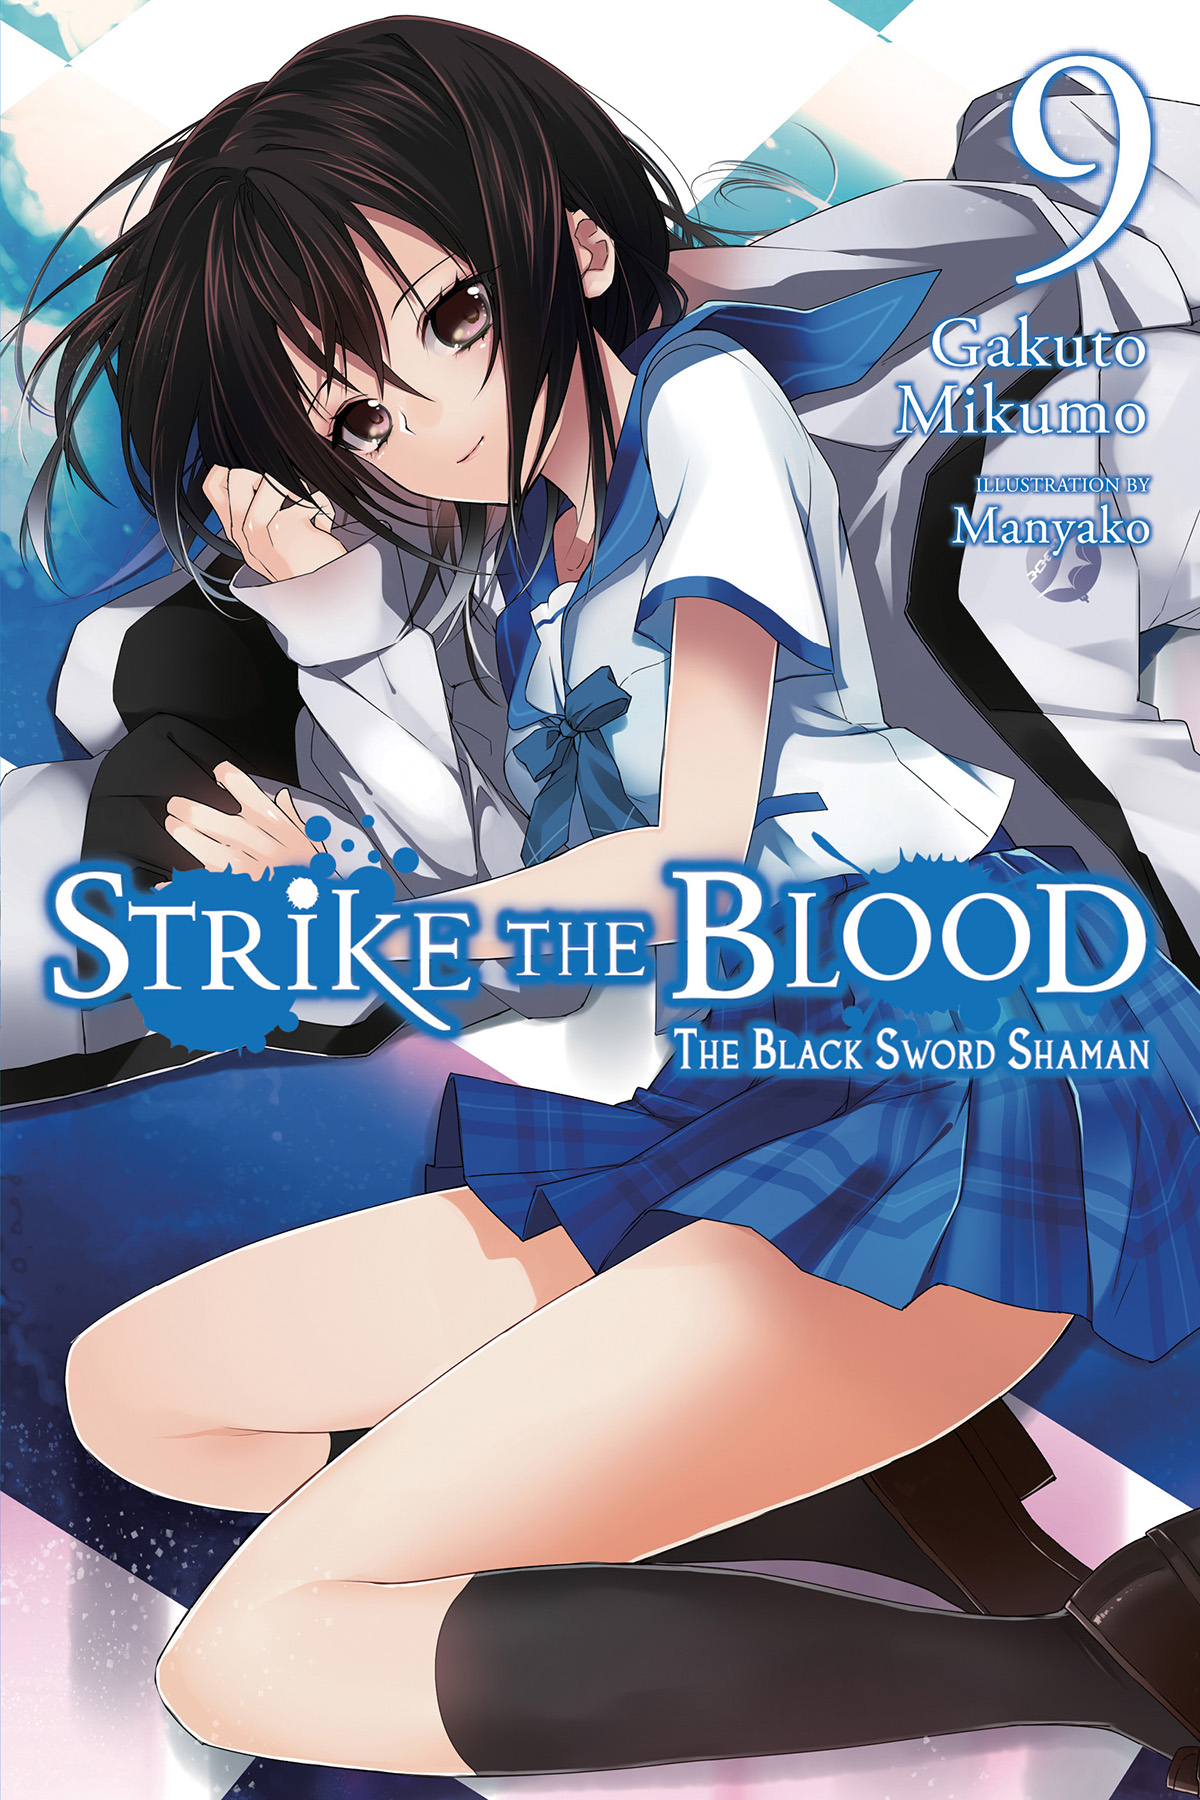 Qoo News] Light novel Strike the Blood makes new OVA to cover